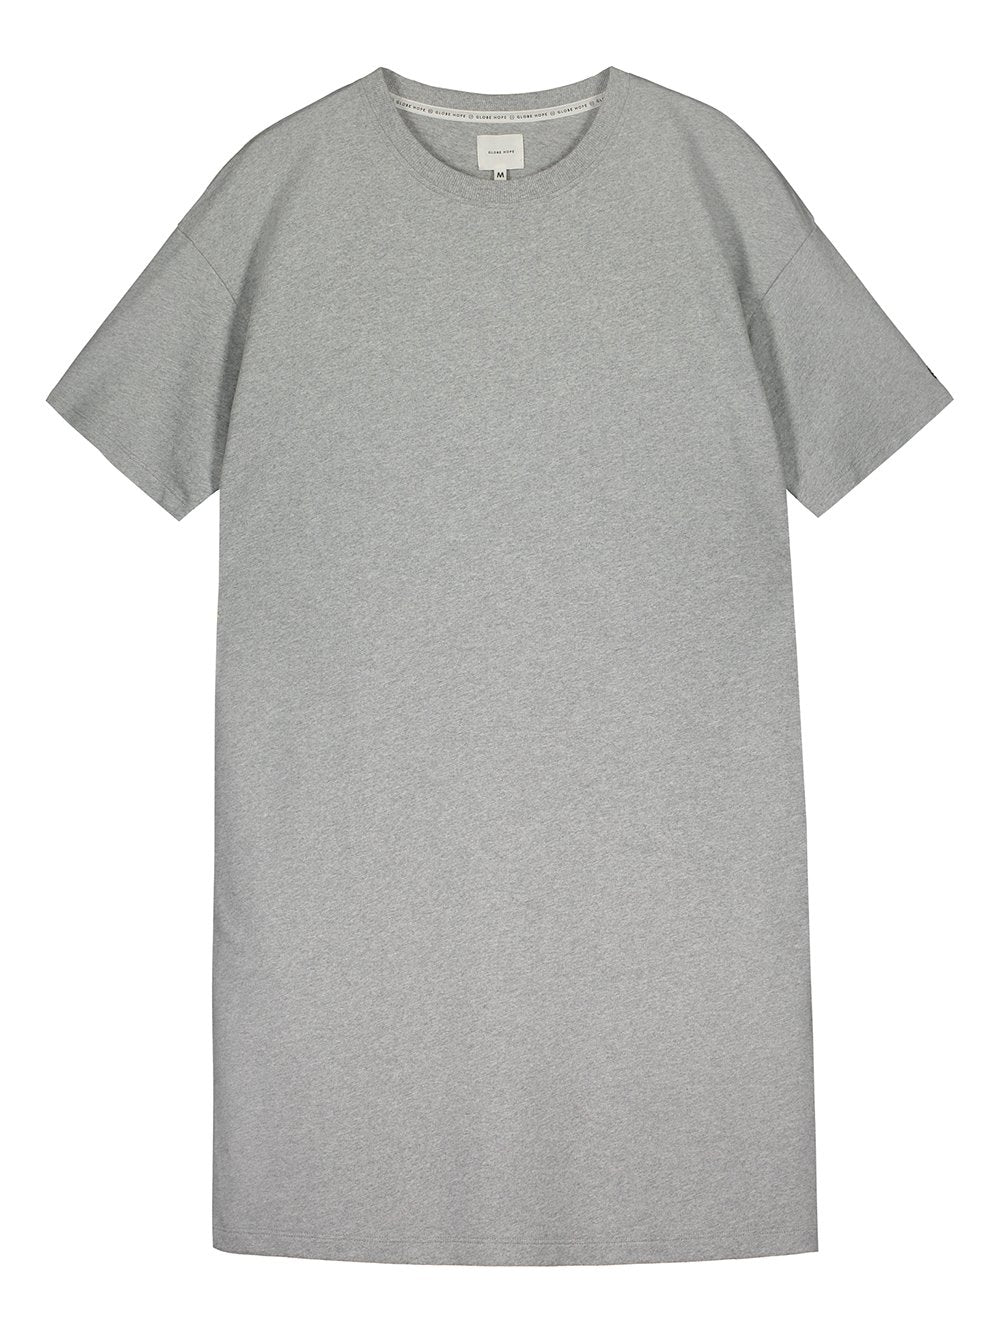 Kitinen T-Shirt Dress Grey Melange